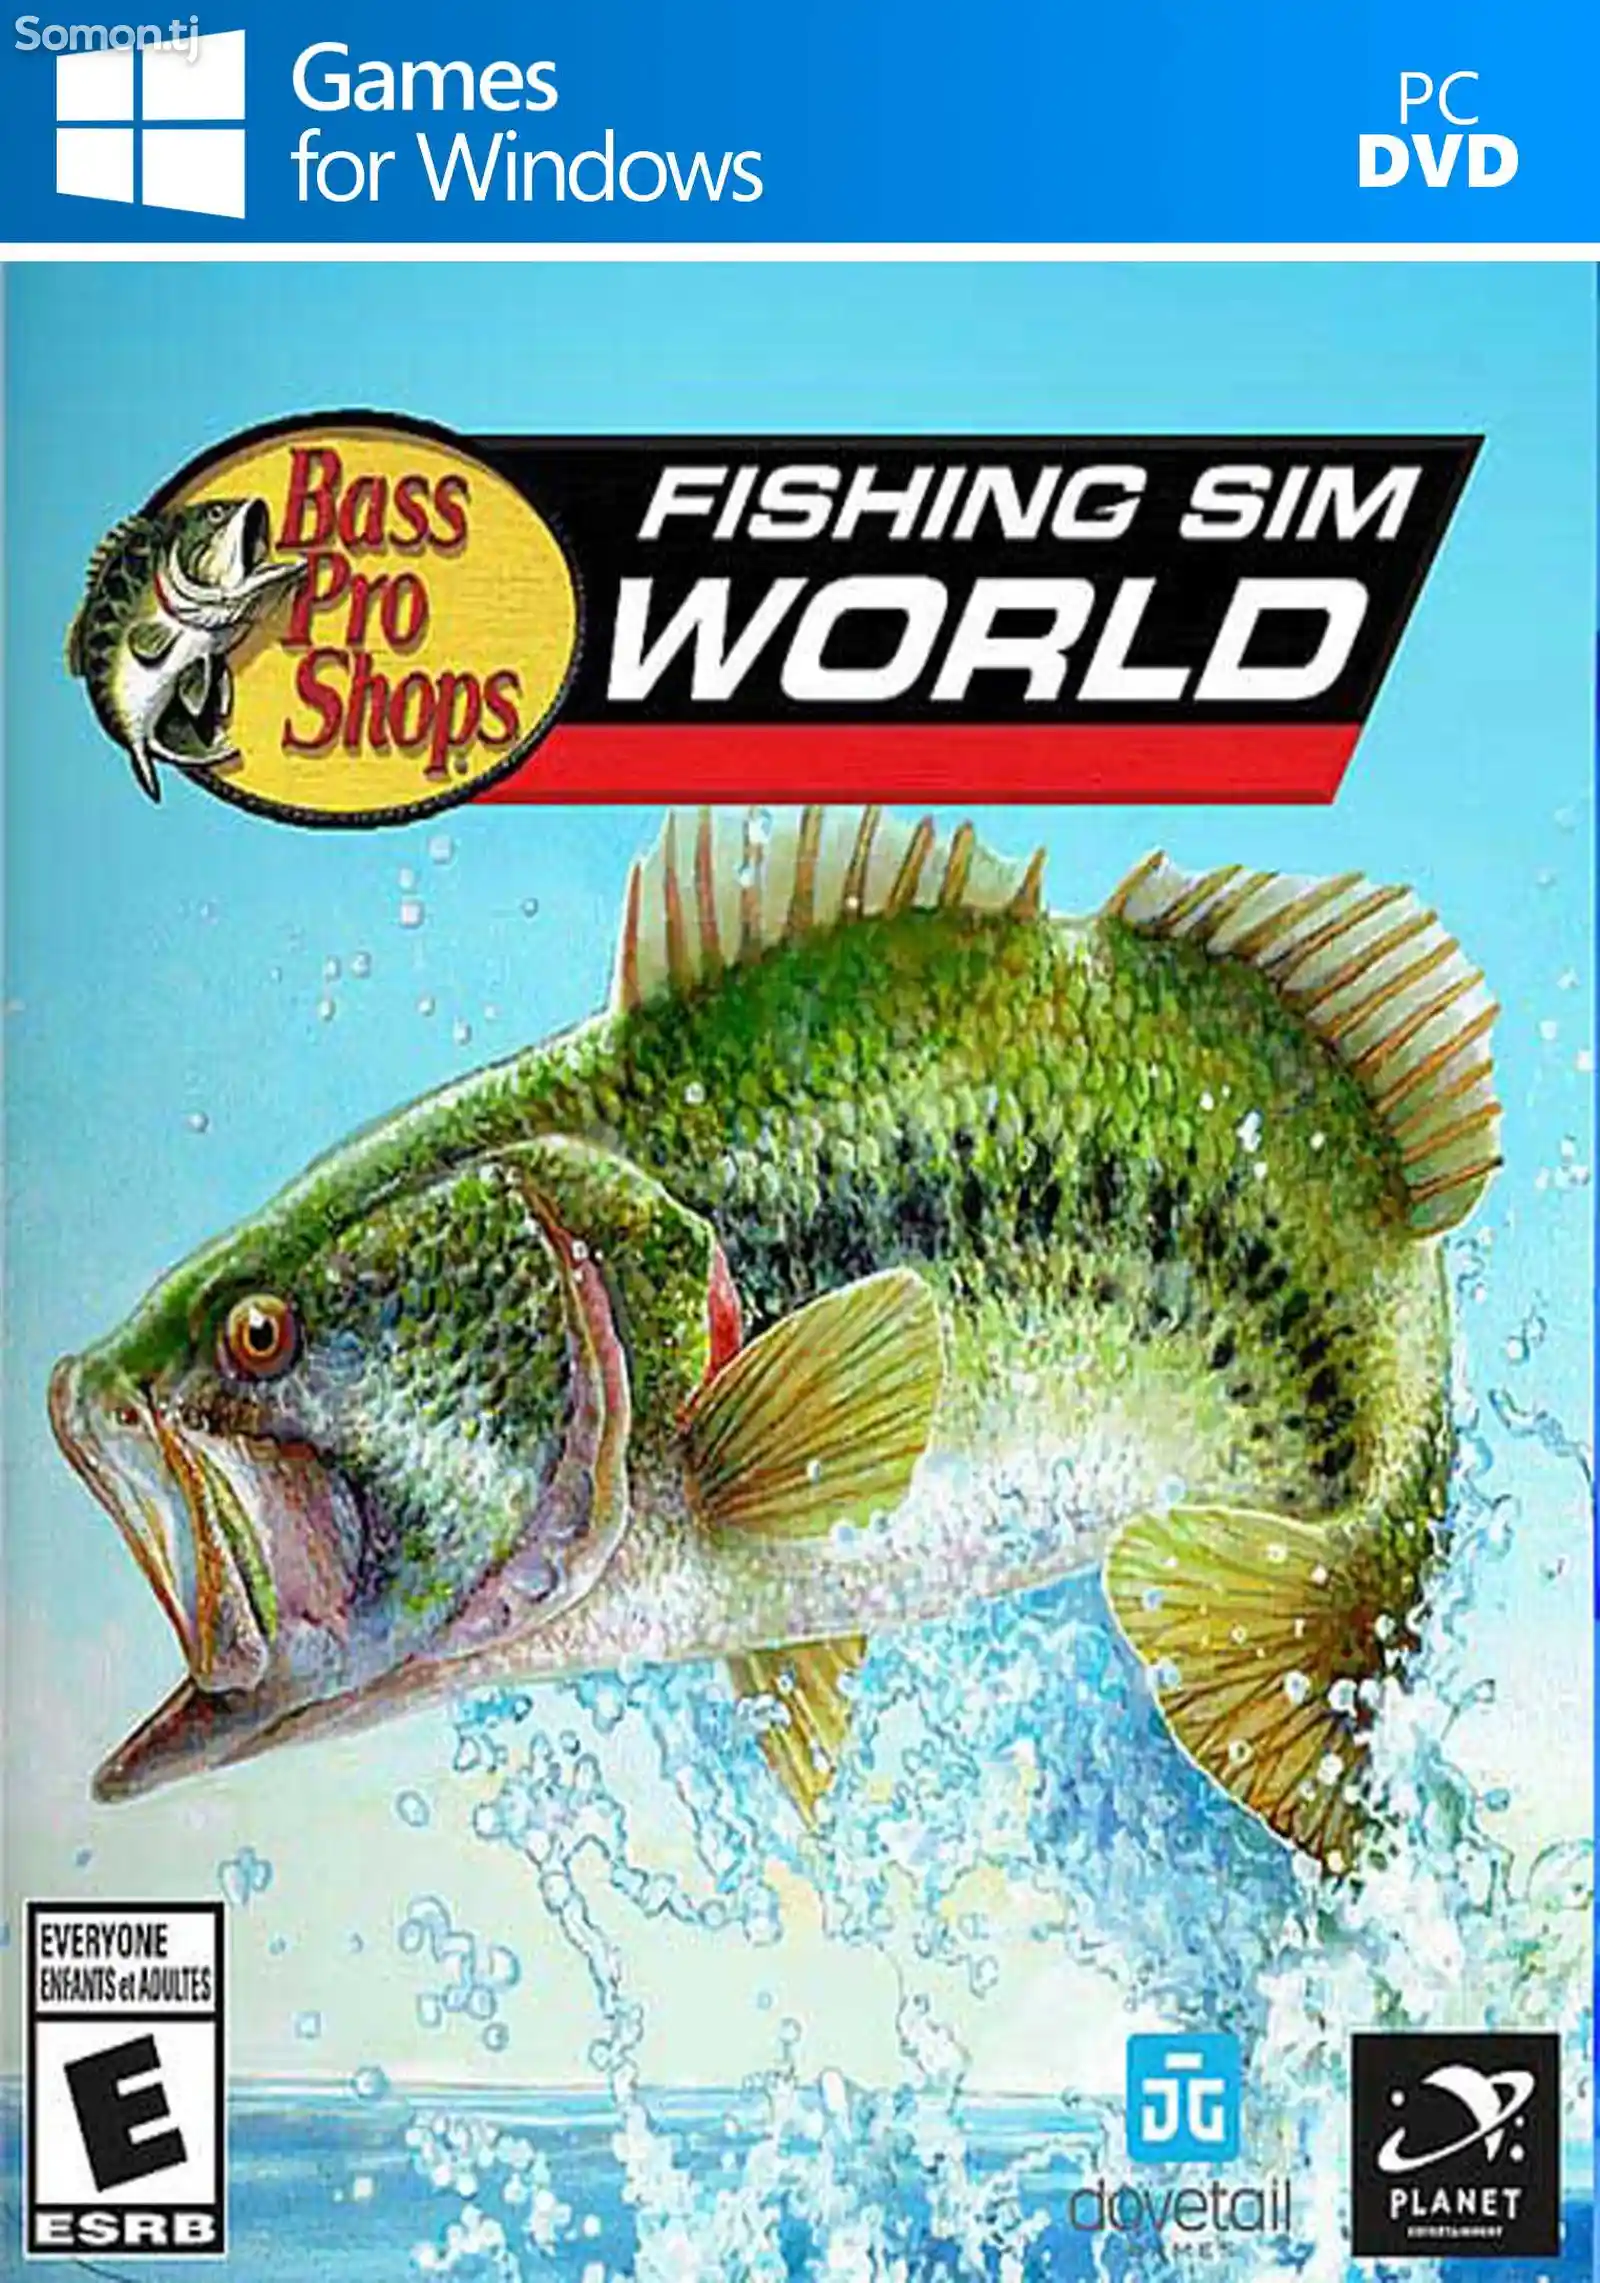 Игра Fishing sim world bass pro shops edition для компьютера-пк-pc-1